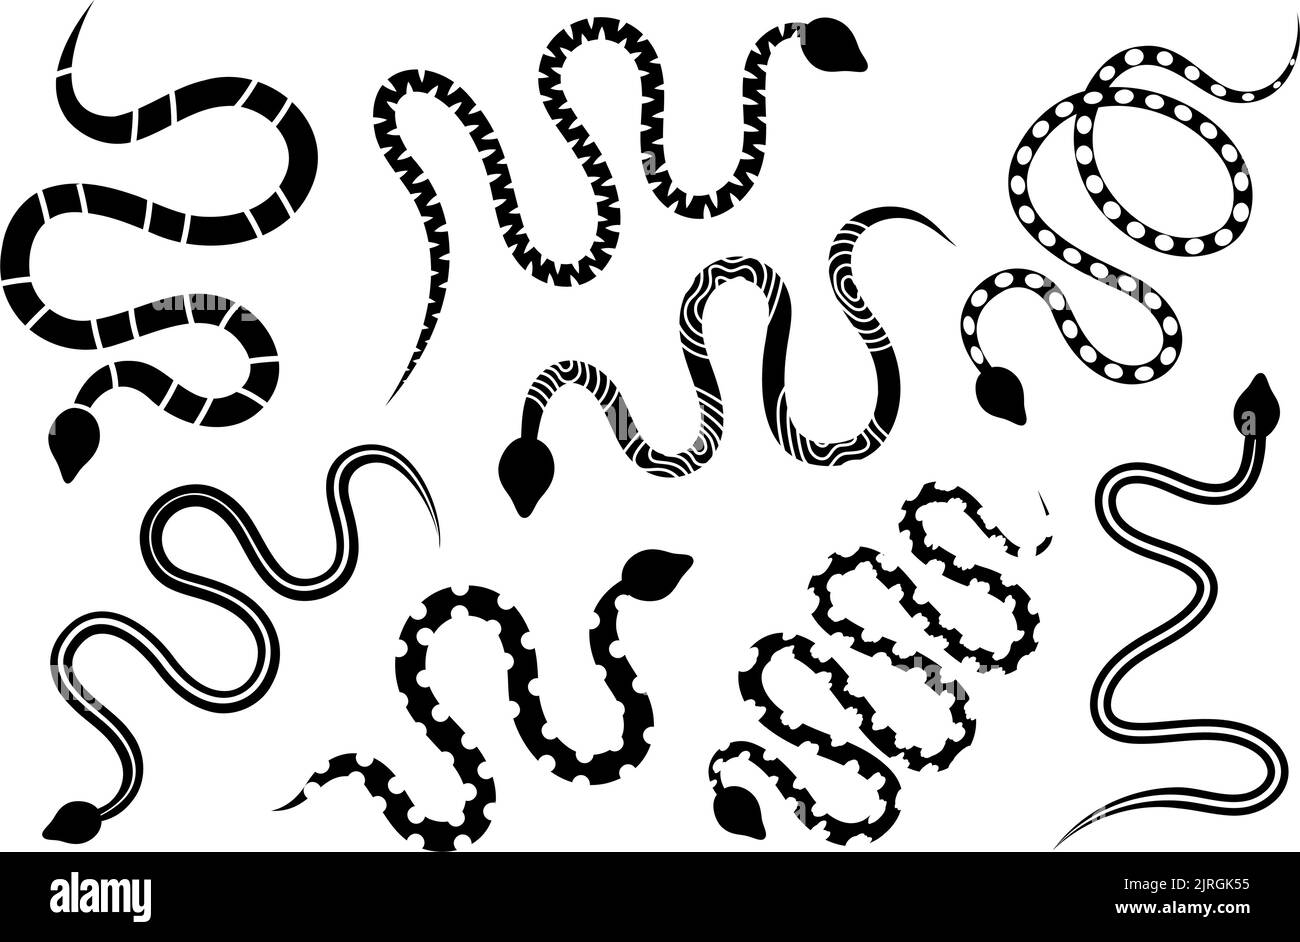 Black snakes silhouettes. Astrology symbol. Black snakes elements for tattoo design. Dangerous exotic rattlesnakes isolated on white background. Stock Vector